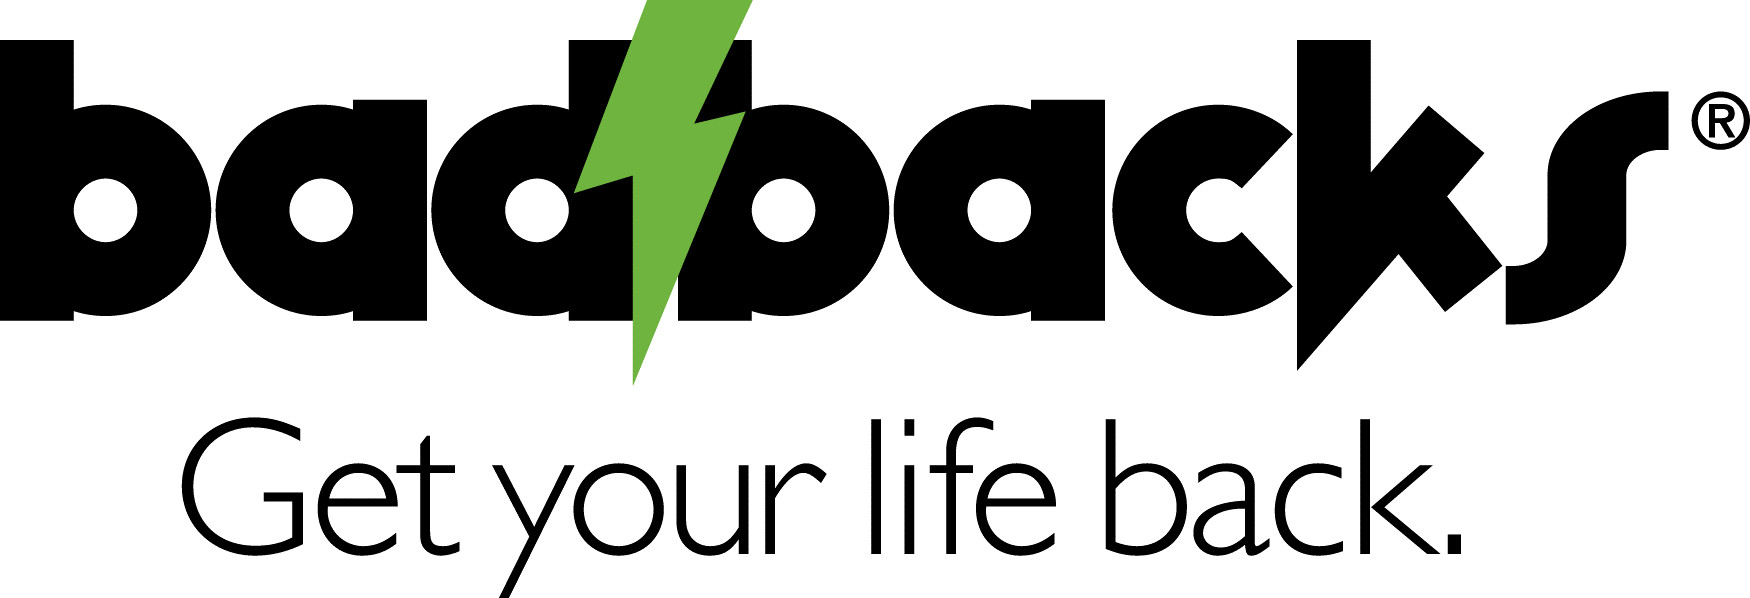 BadBacks HealthEzone